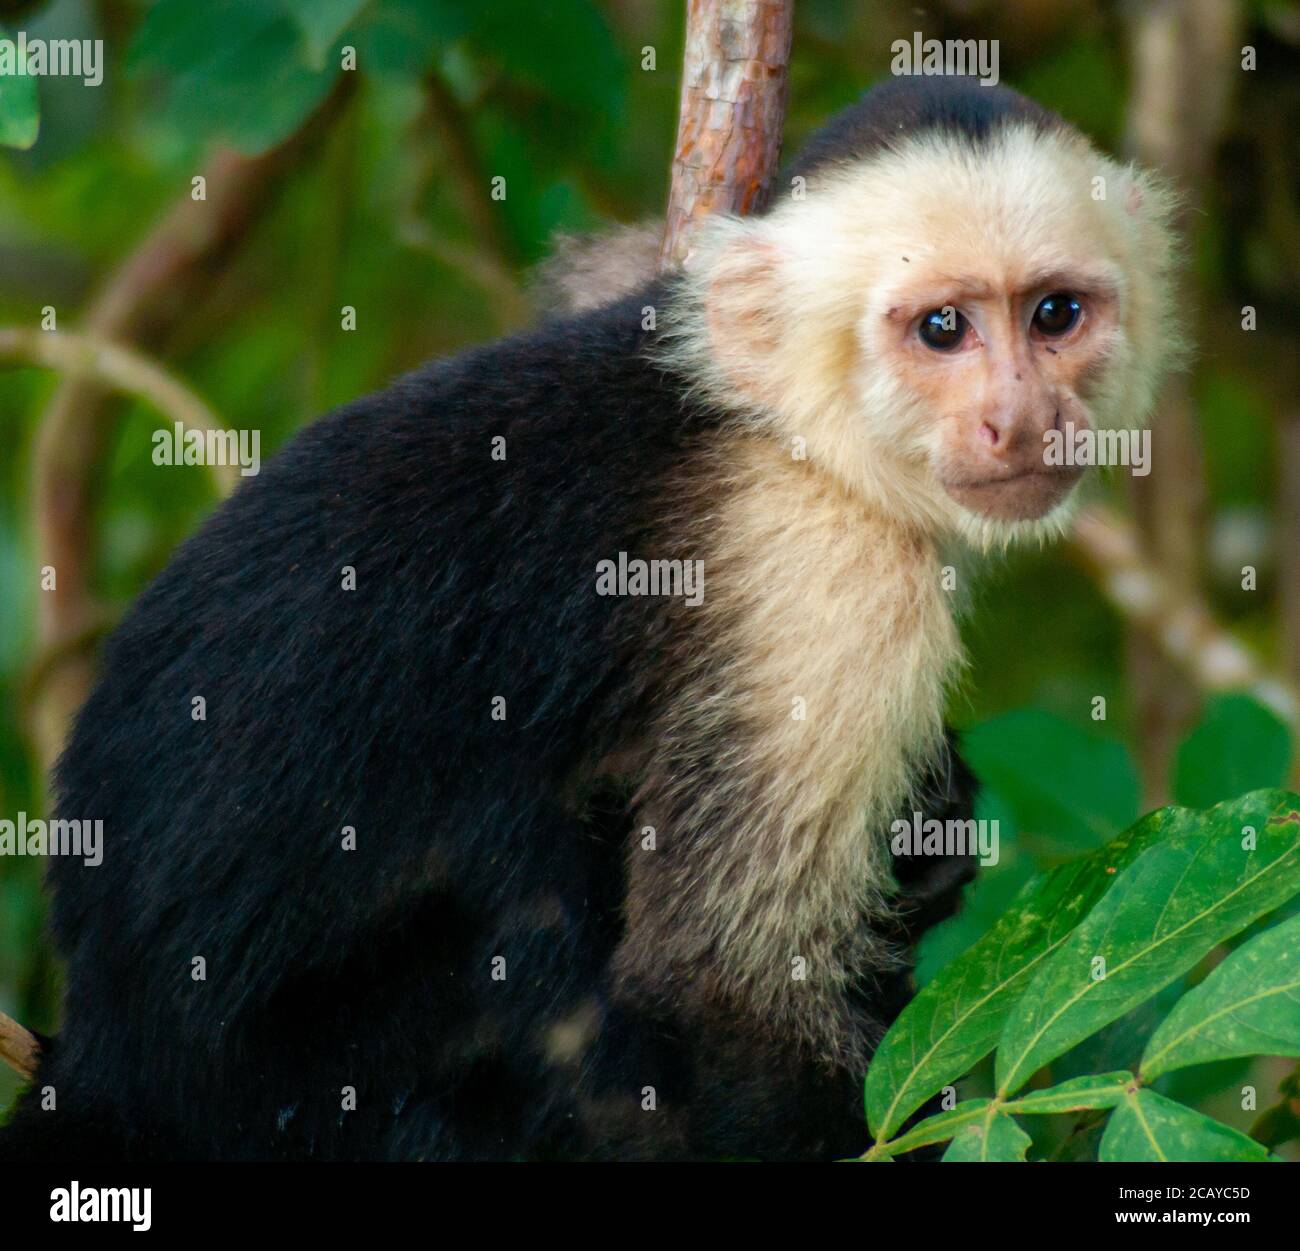 Small Monkey in a Tree Stock Photo